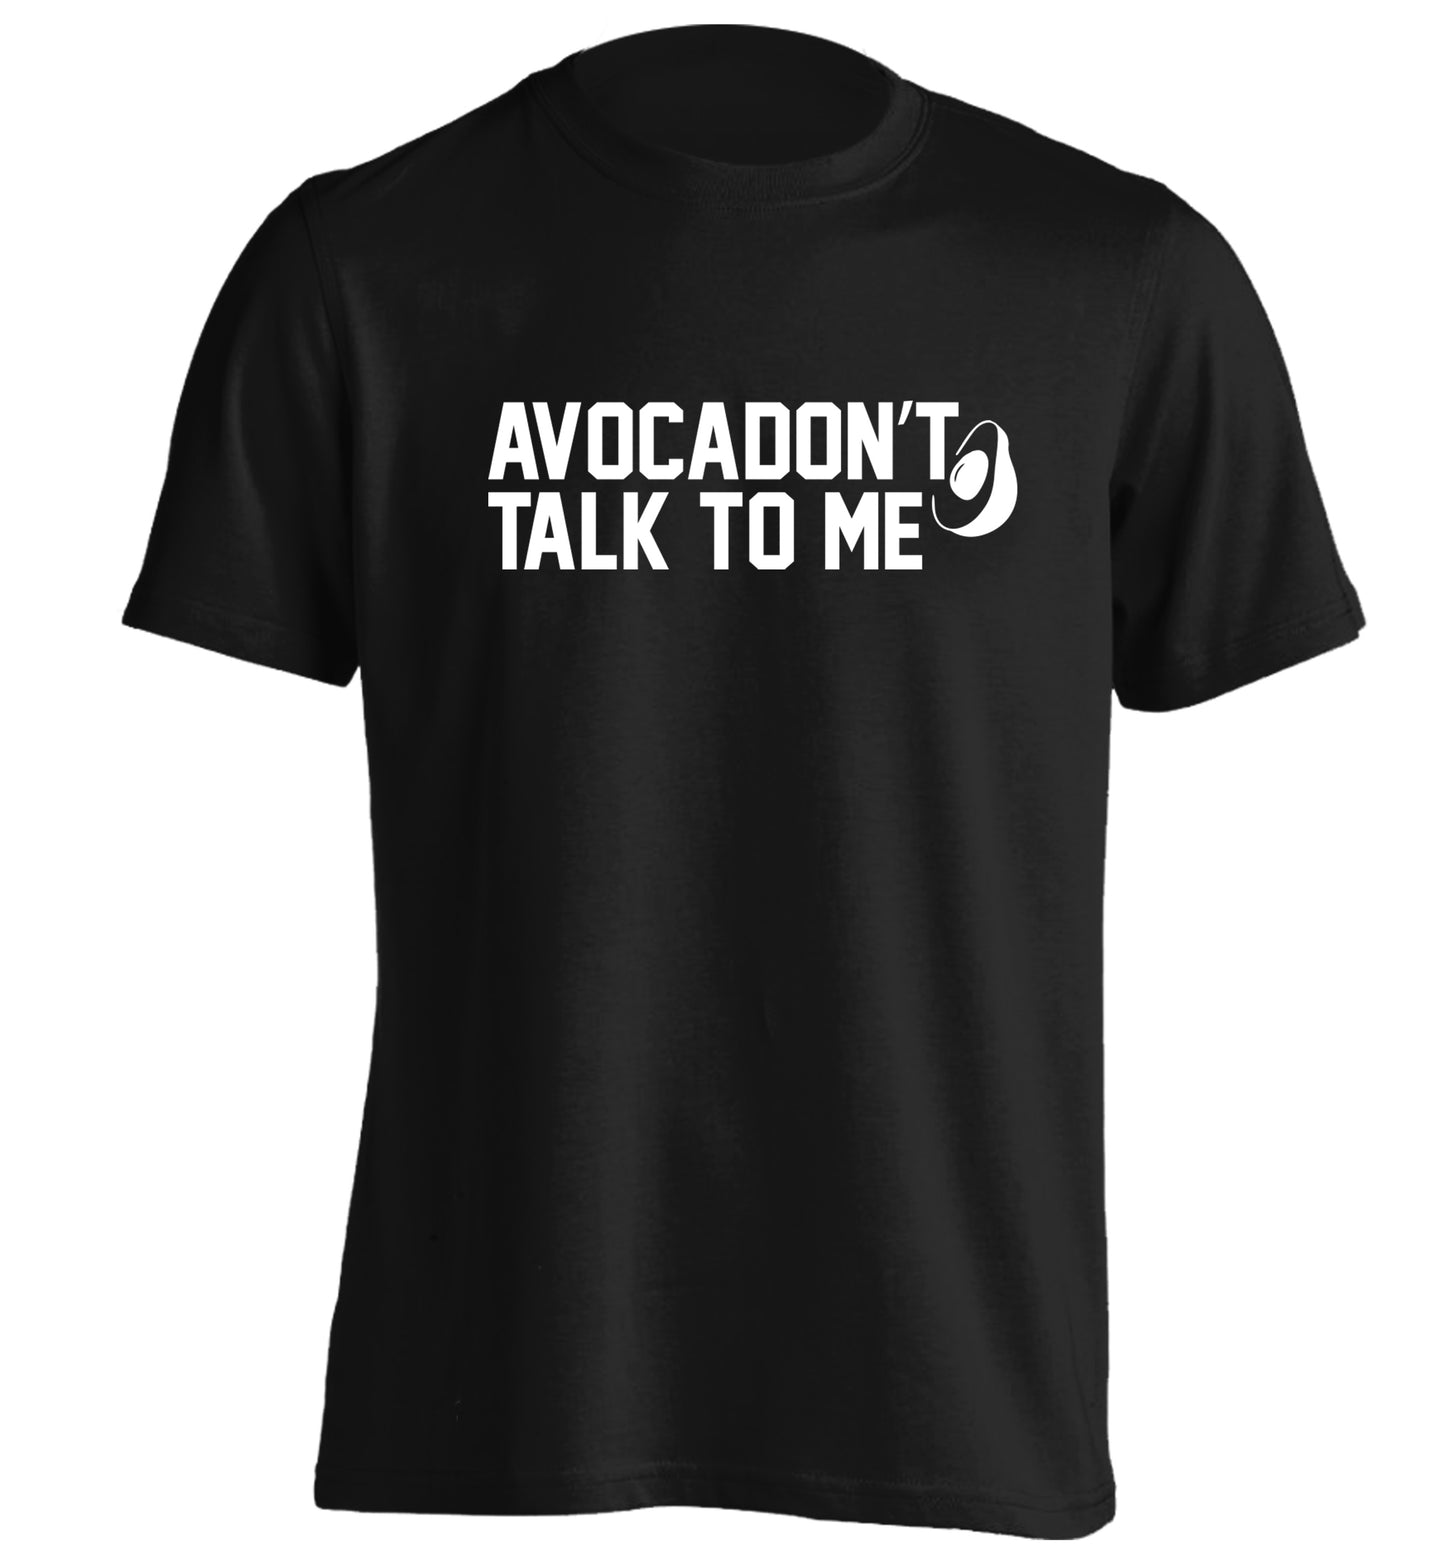 Avocadon't talk to me adults unisex black Tshirt 2XL